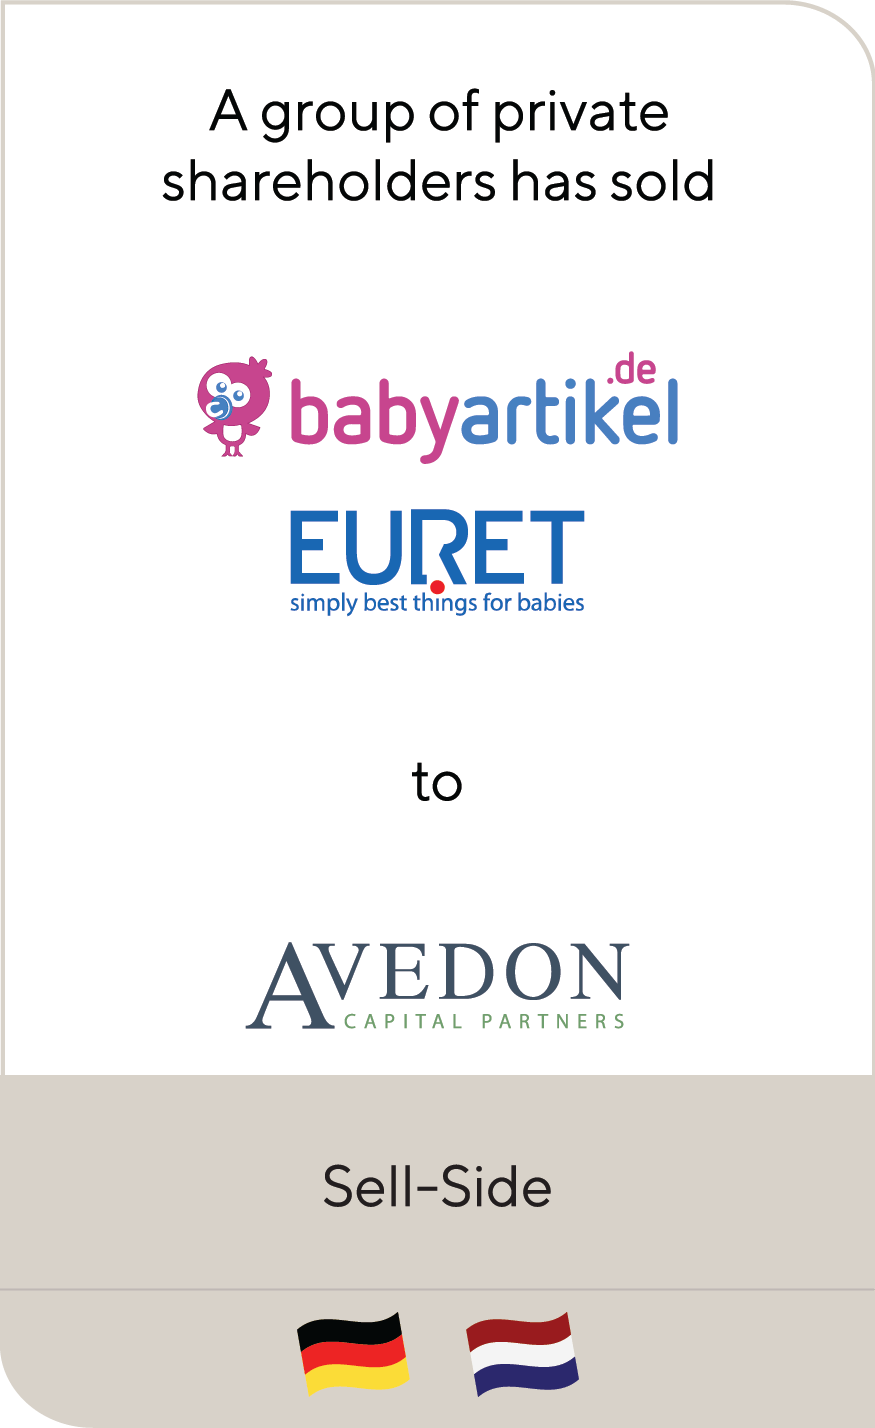 KP Family International GmbH Babyartikel Euret Avendon Capital Partners 2021